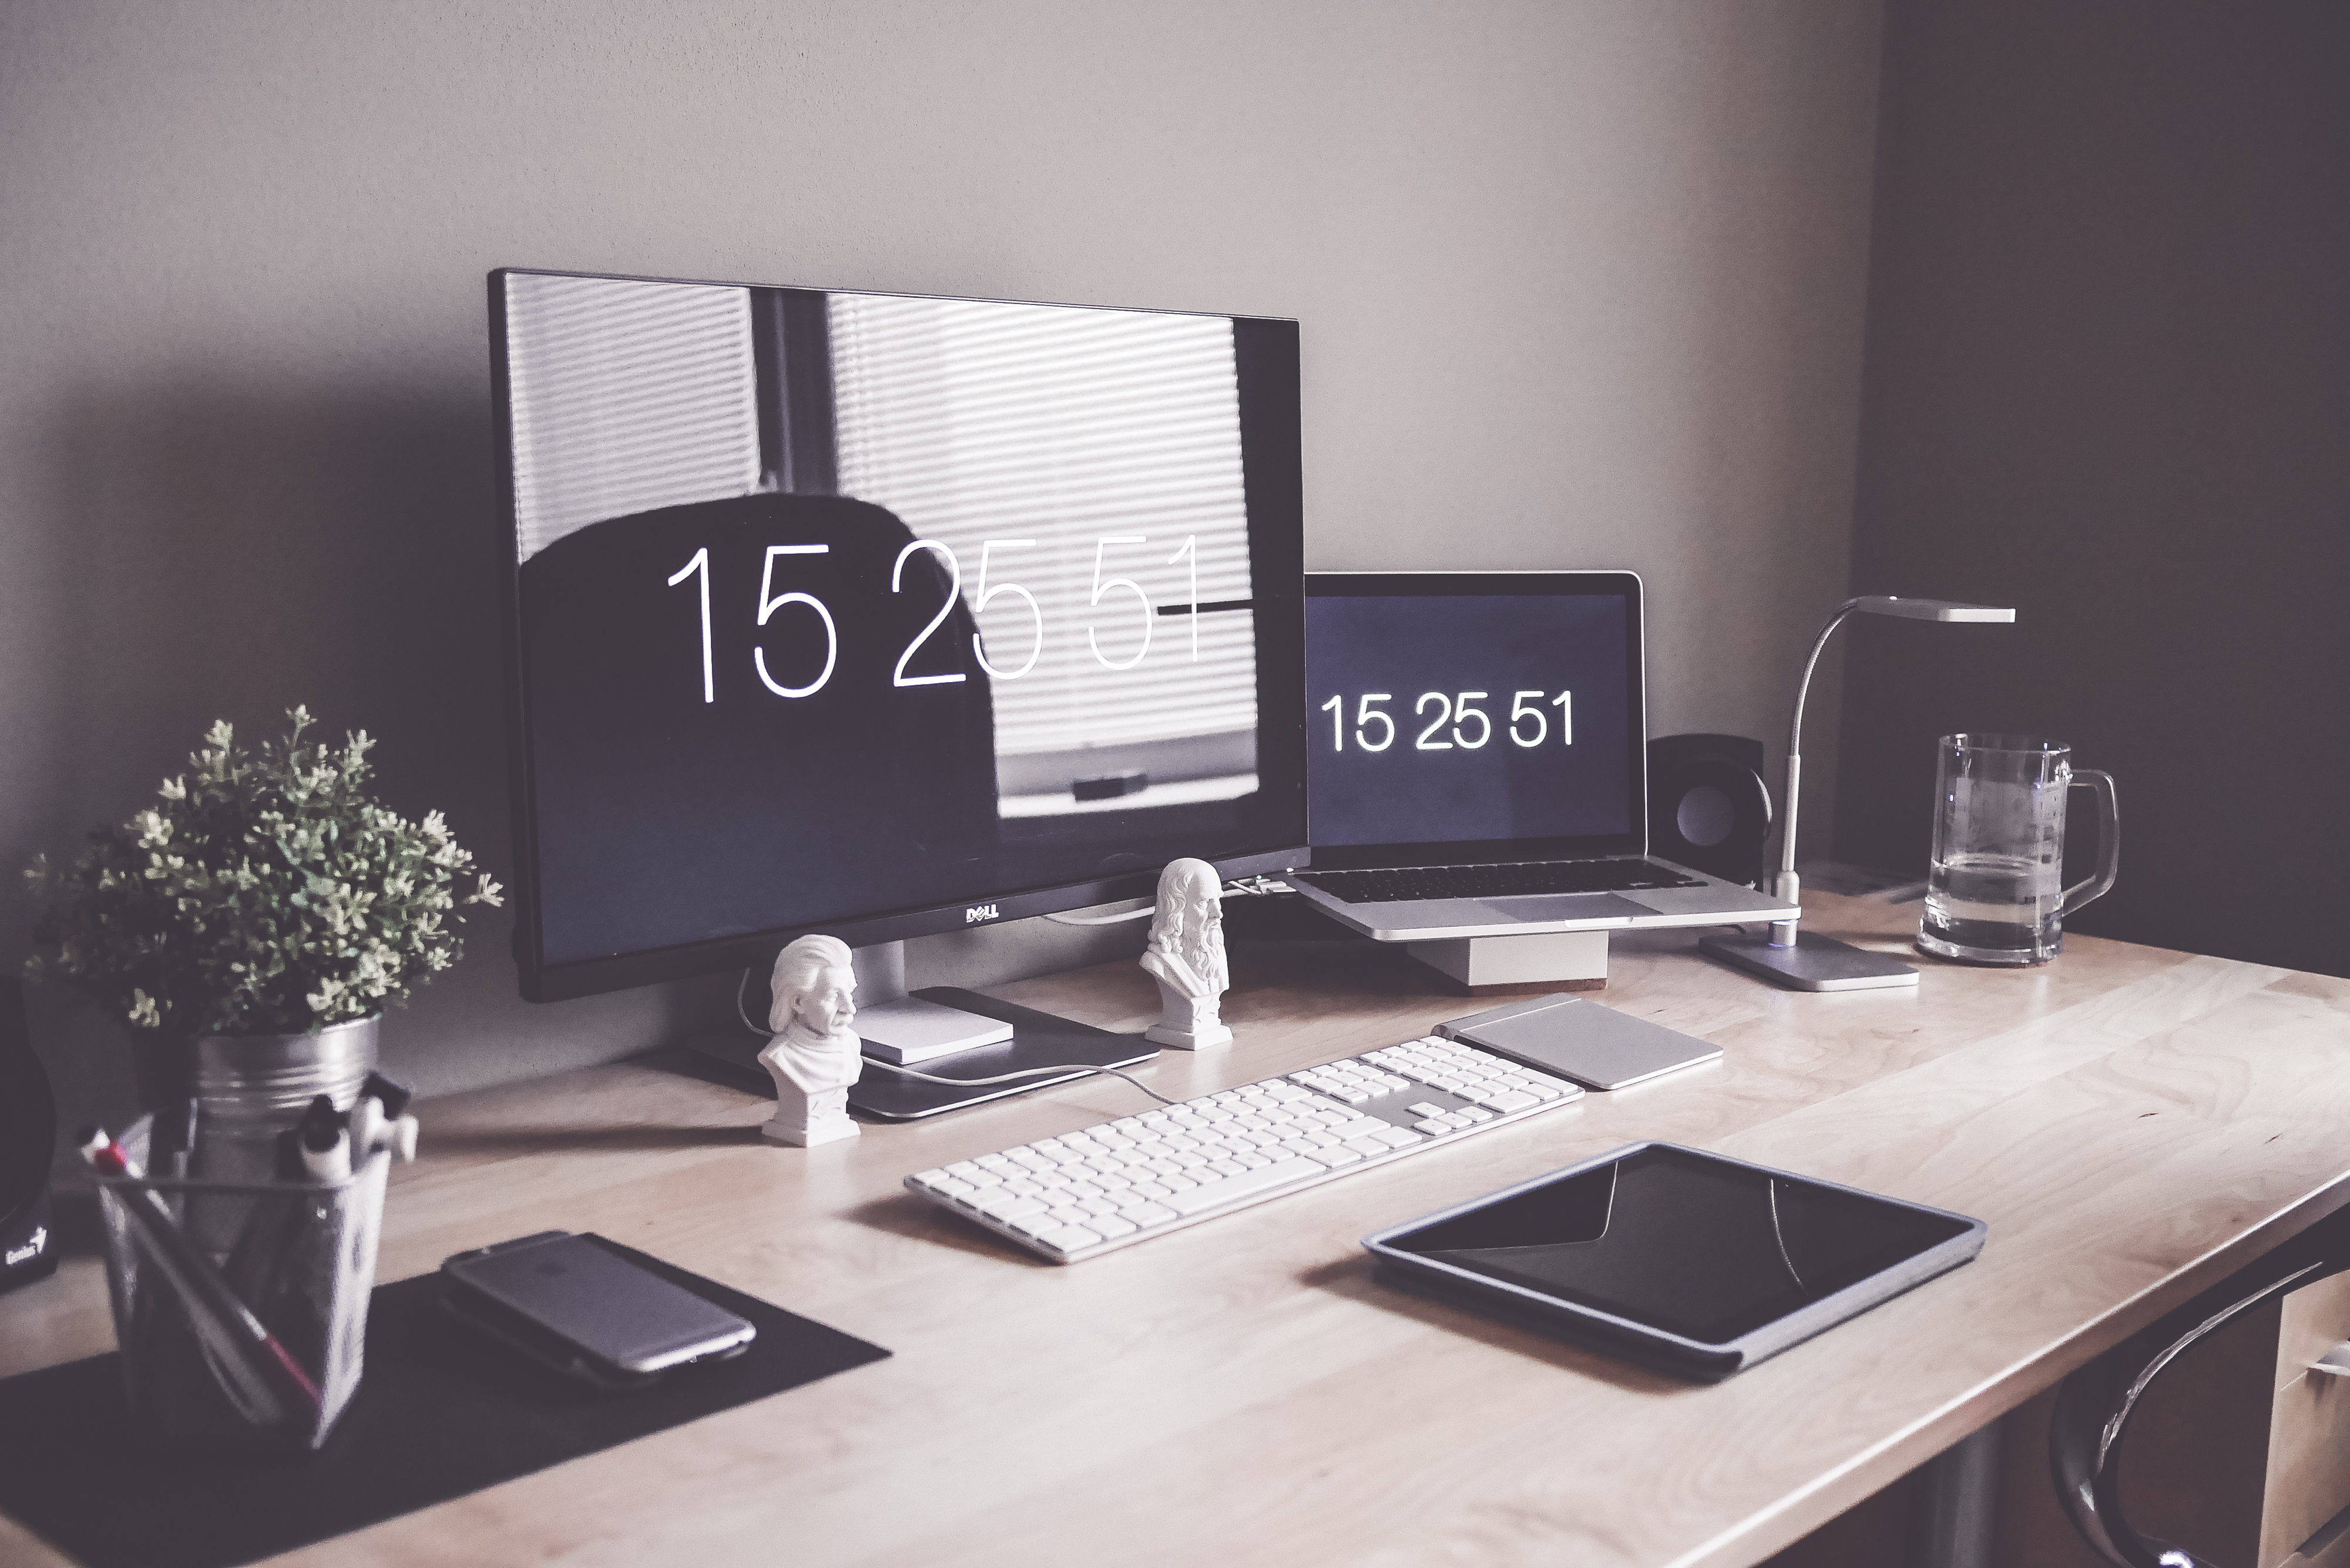 minimalist-home-office-workspace-desk-setup-picjumbo-com